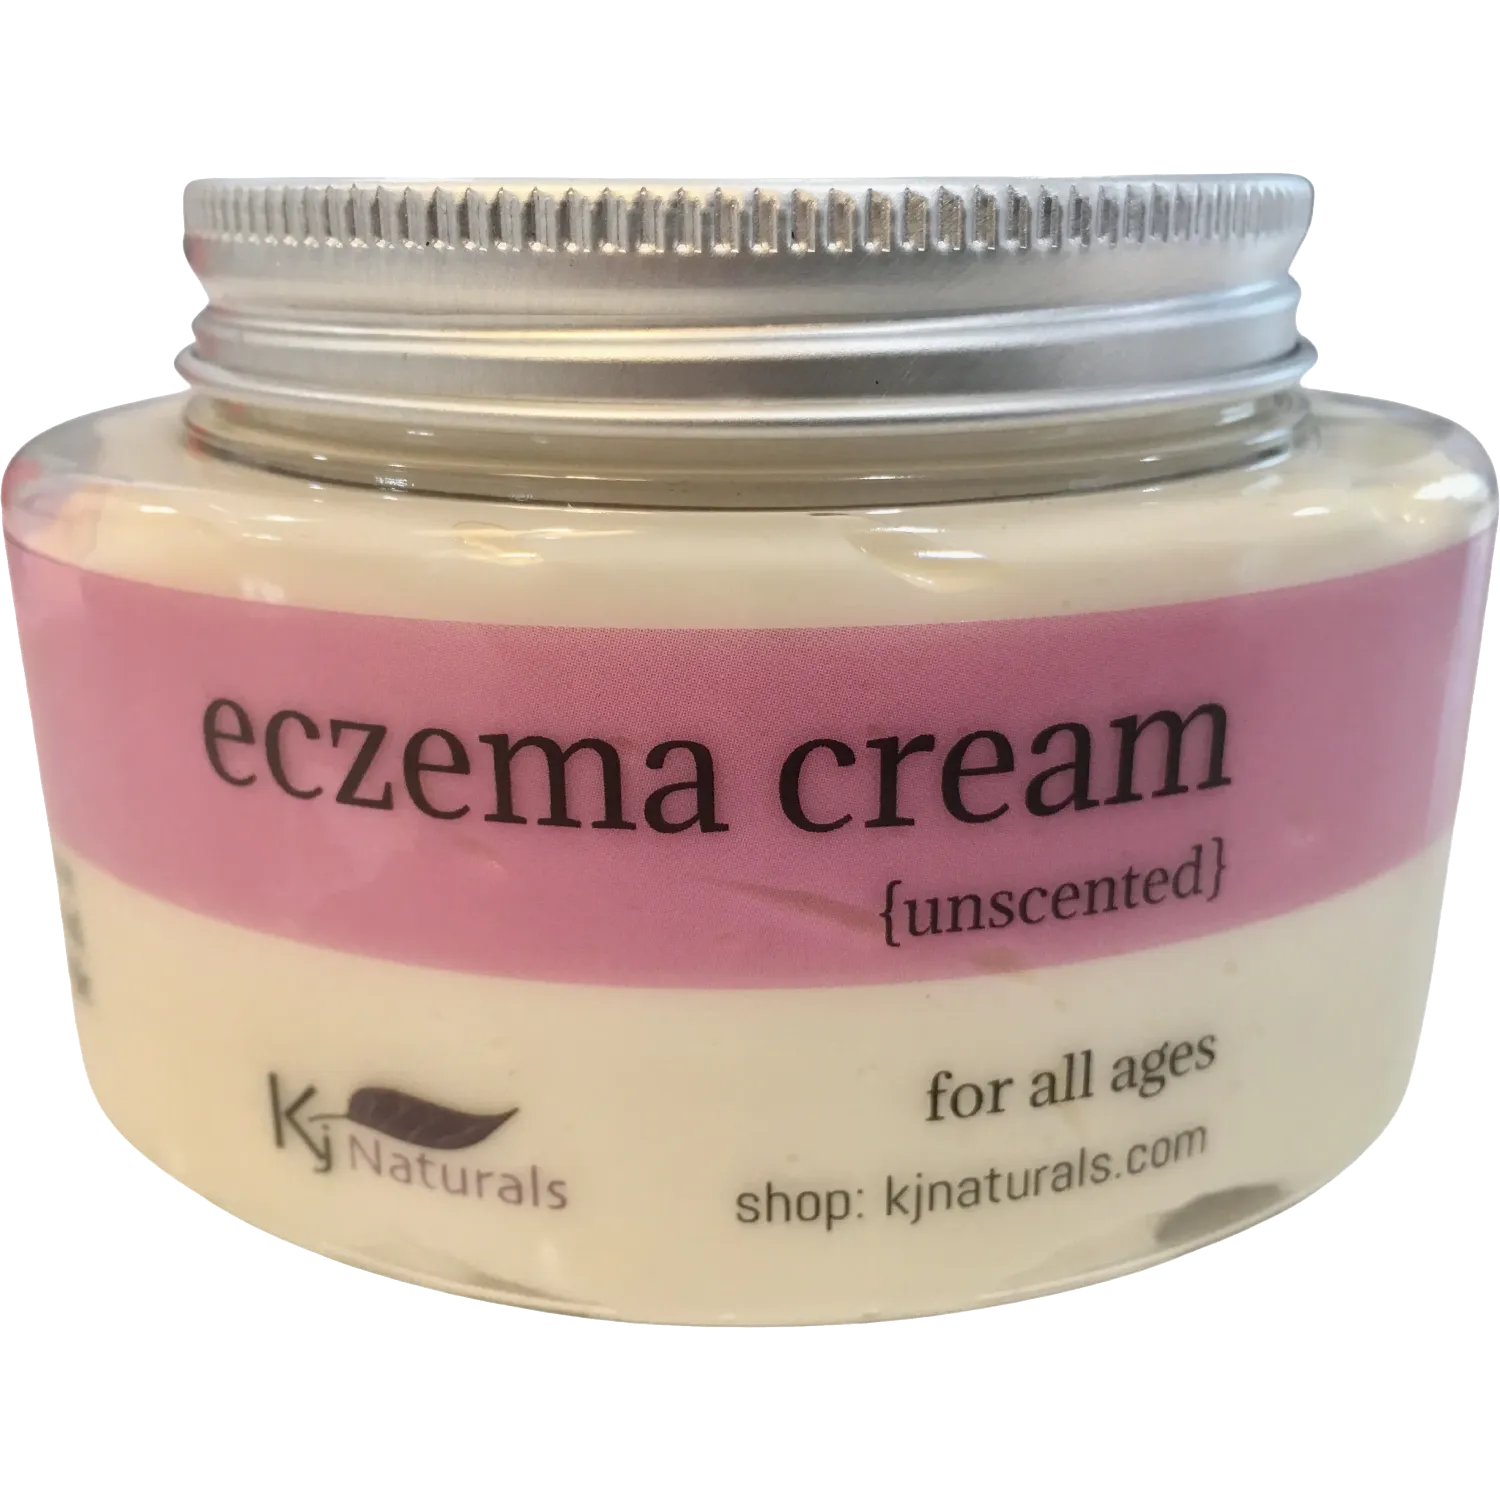 Free Kj Naturals Eczema Cream